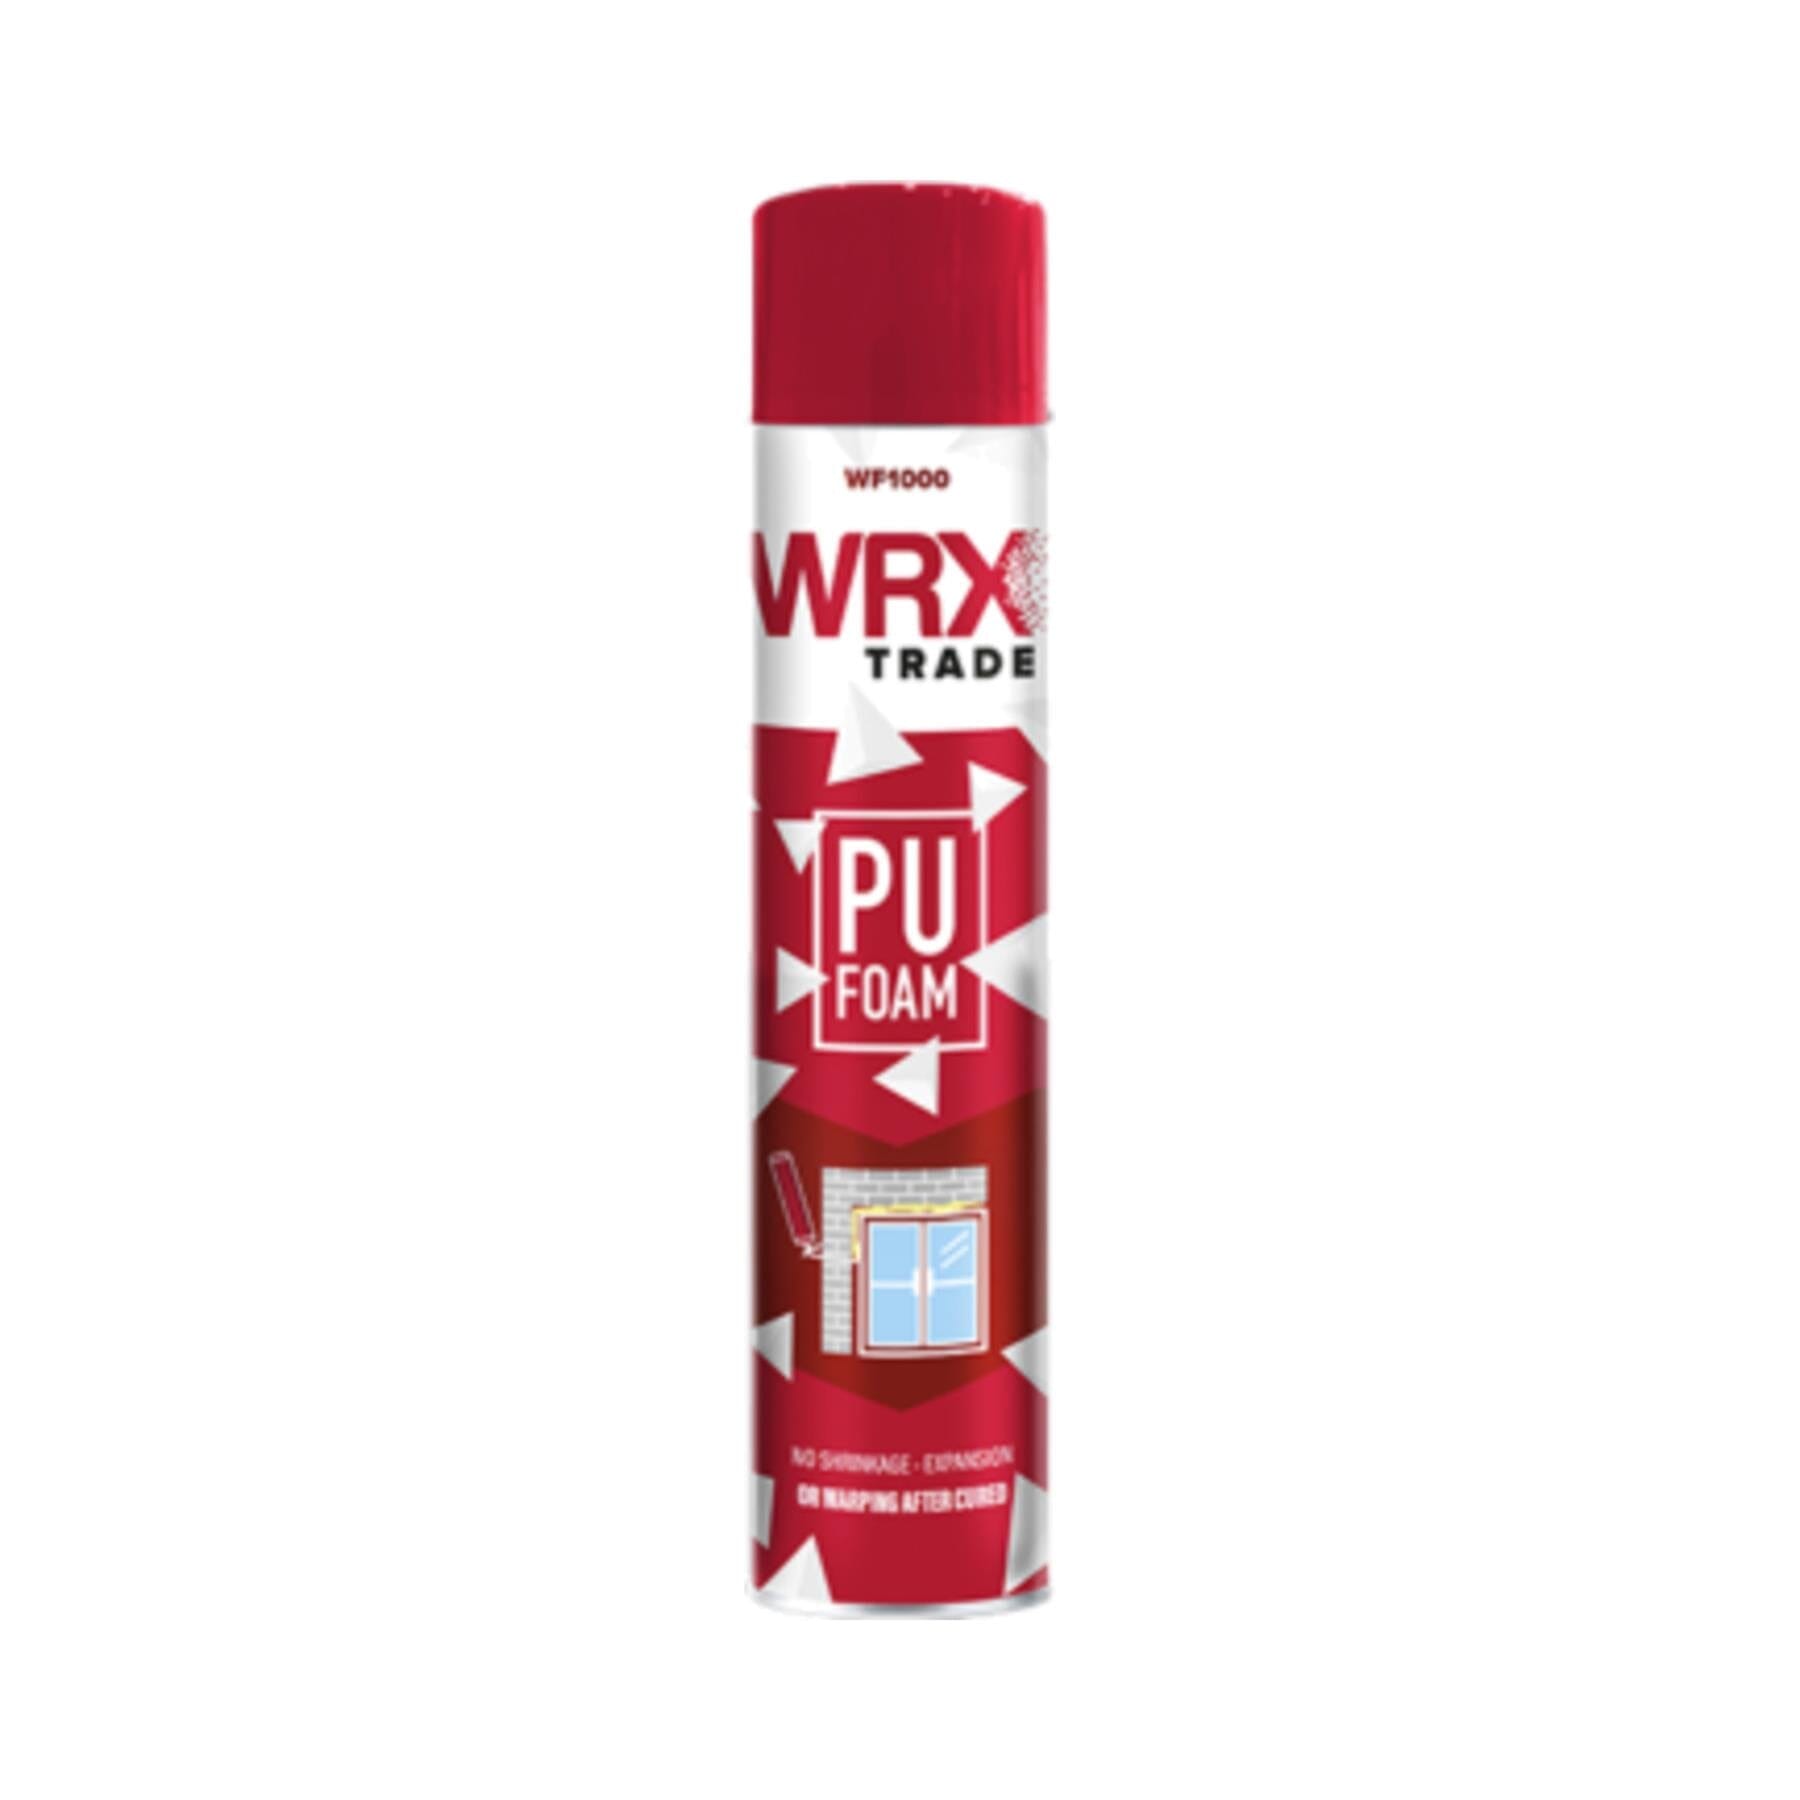 WRX Trade PU Expanding Foam 850g Expanding Foam Filler | Snape & Sons